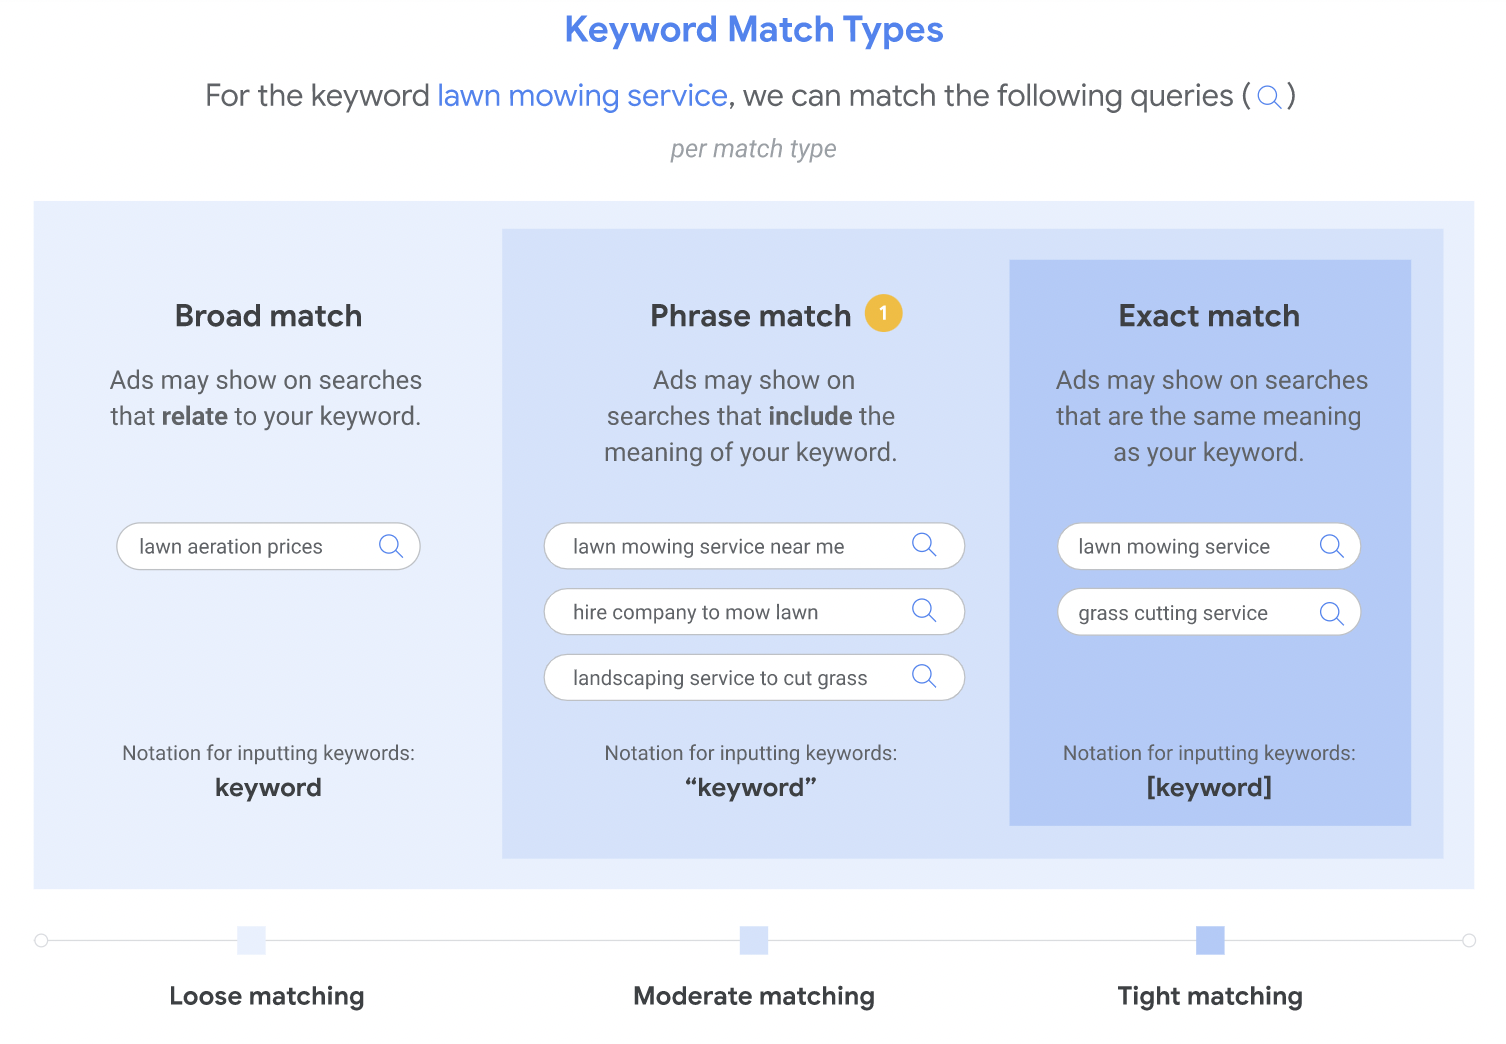 Broad match, phrase match, and exact match